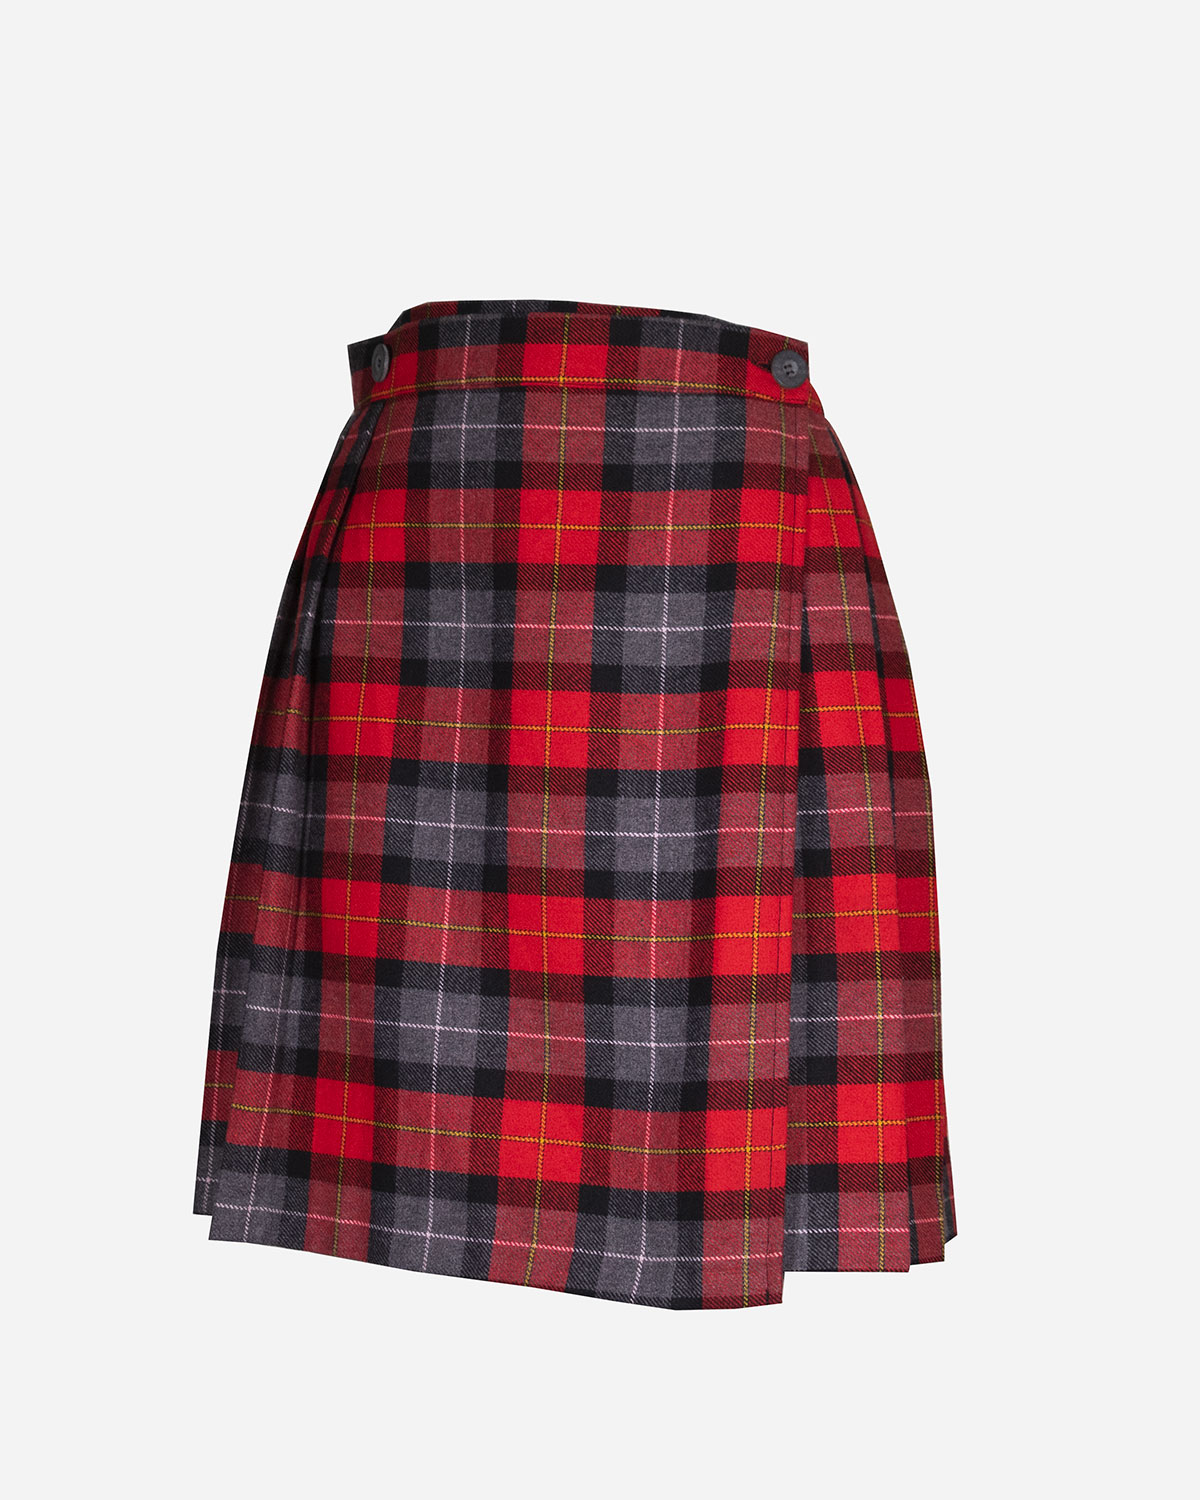 Women's colorful tartan miniskirts: 4 pieces